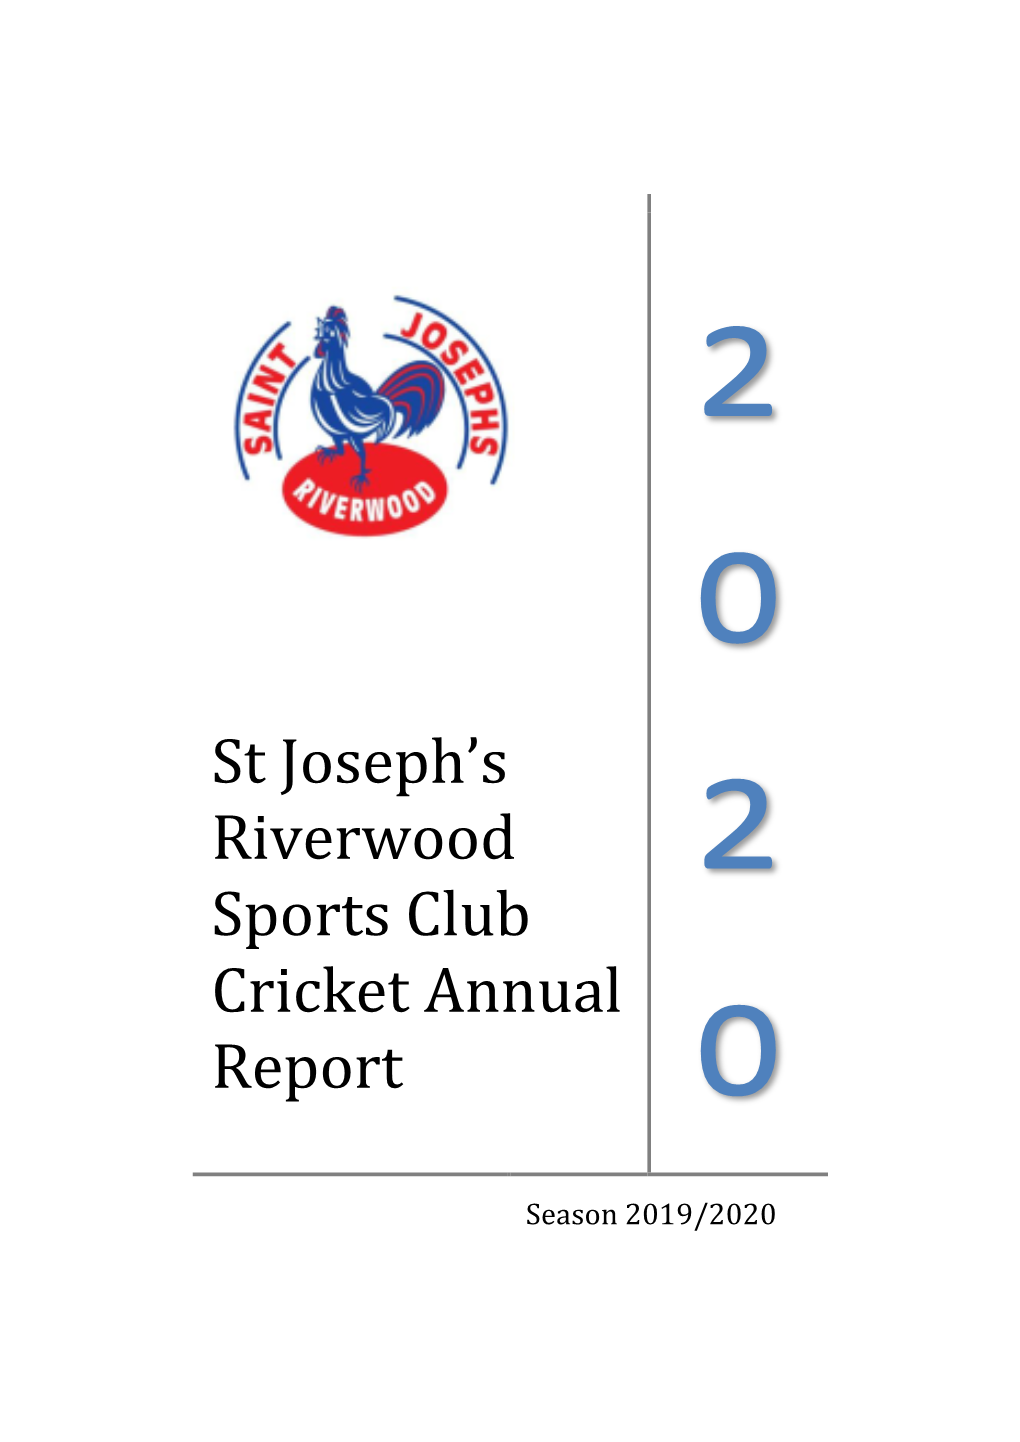 St Joseph's Riverwood Sports Club Cricket Presentation